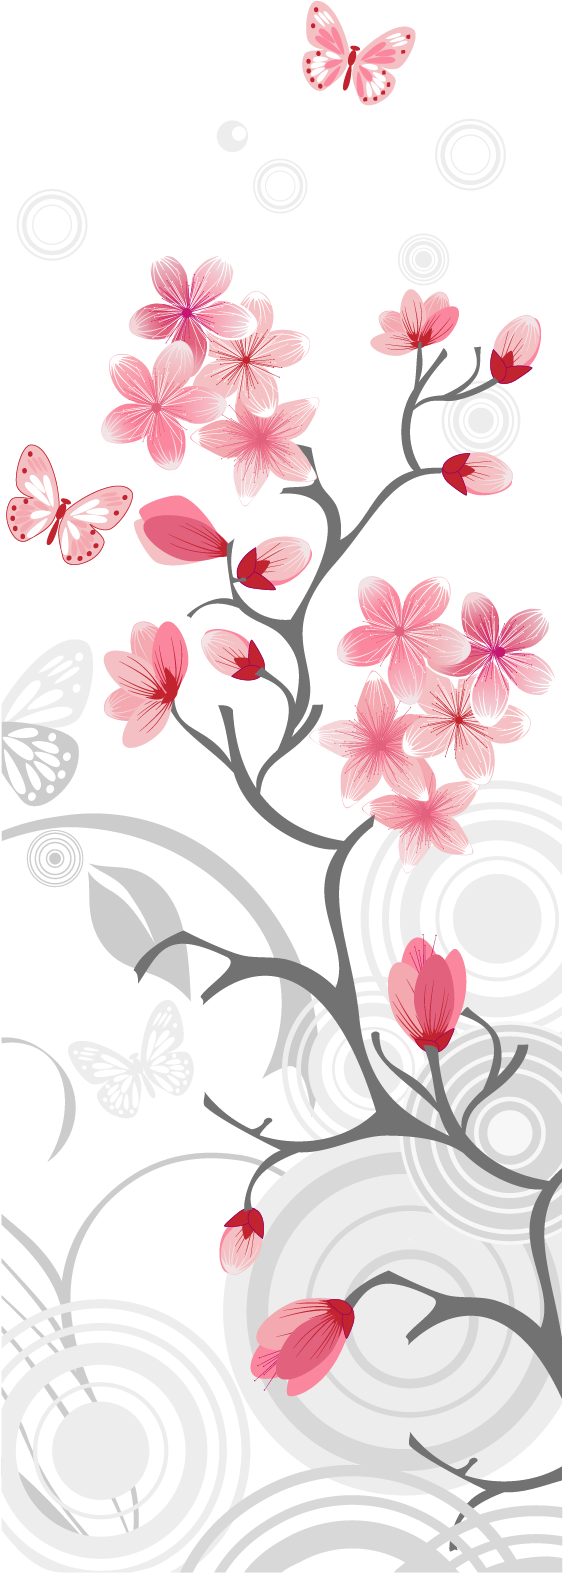 Cherry Blossom Illustration - Cherry Blossom Illustration (654x1735)